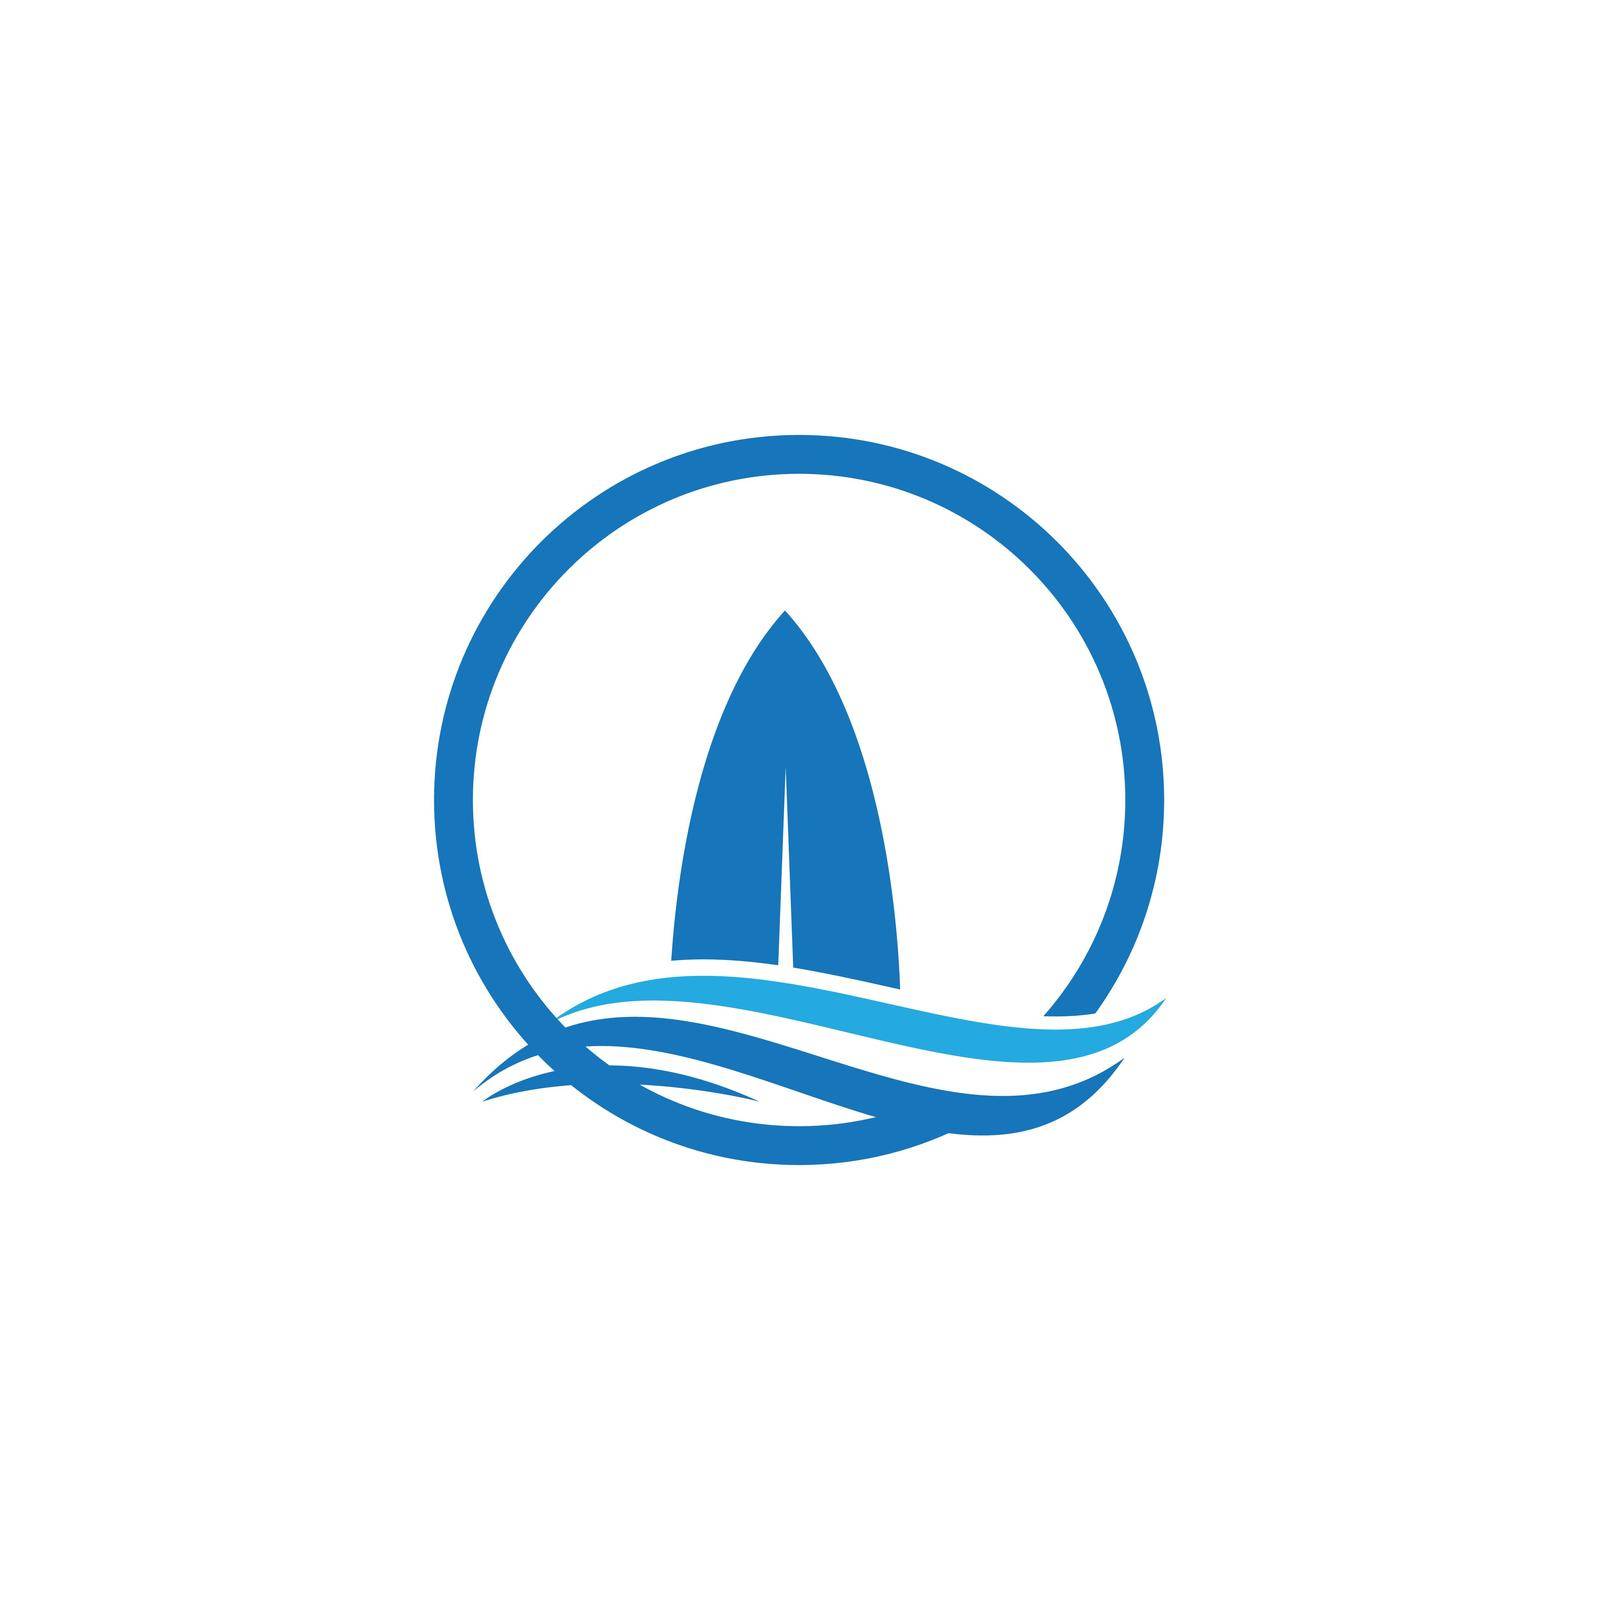 Surf board logo vector flat design